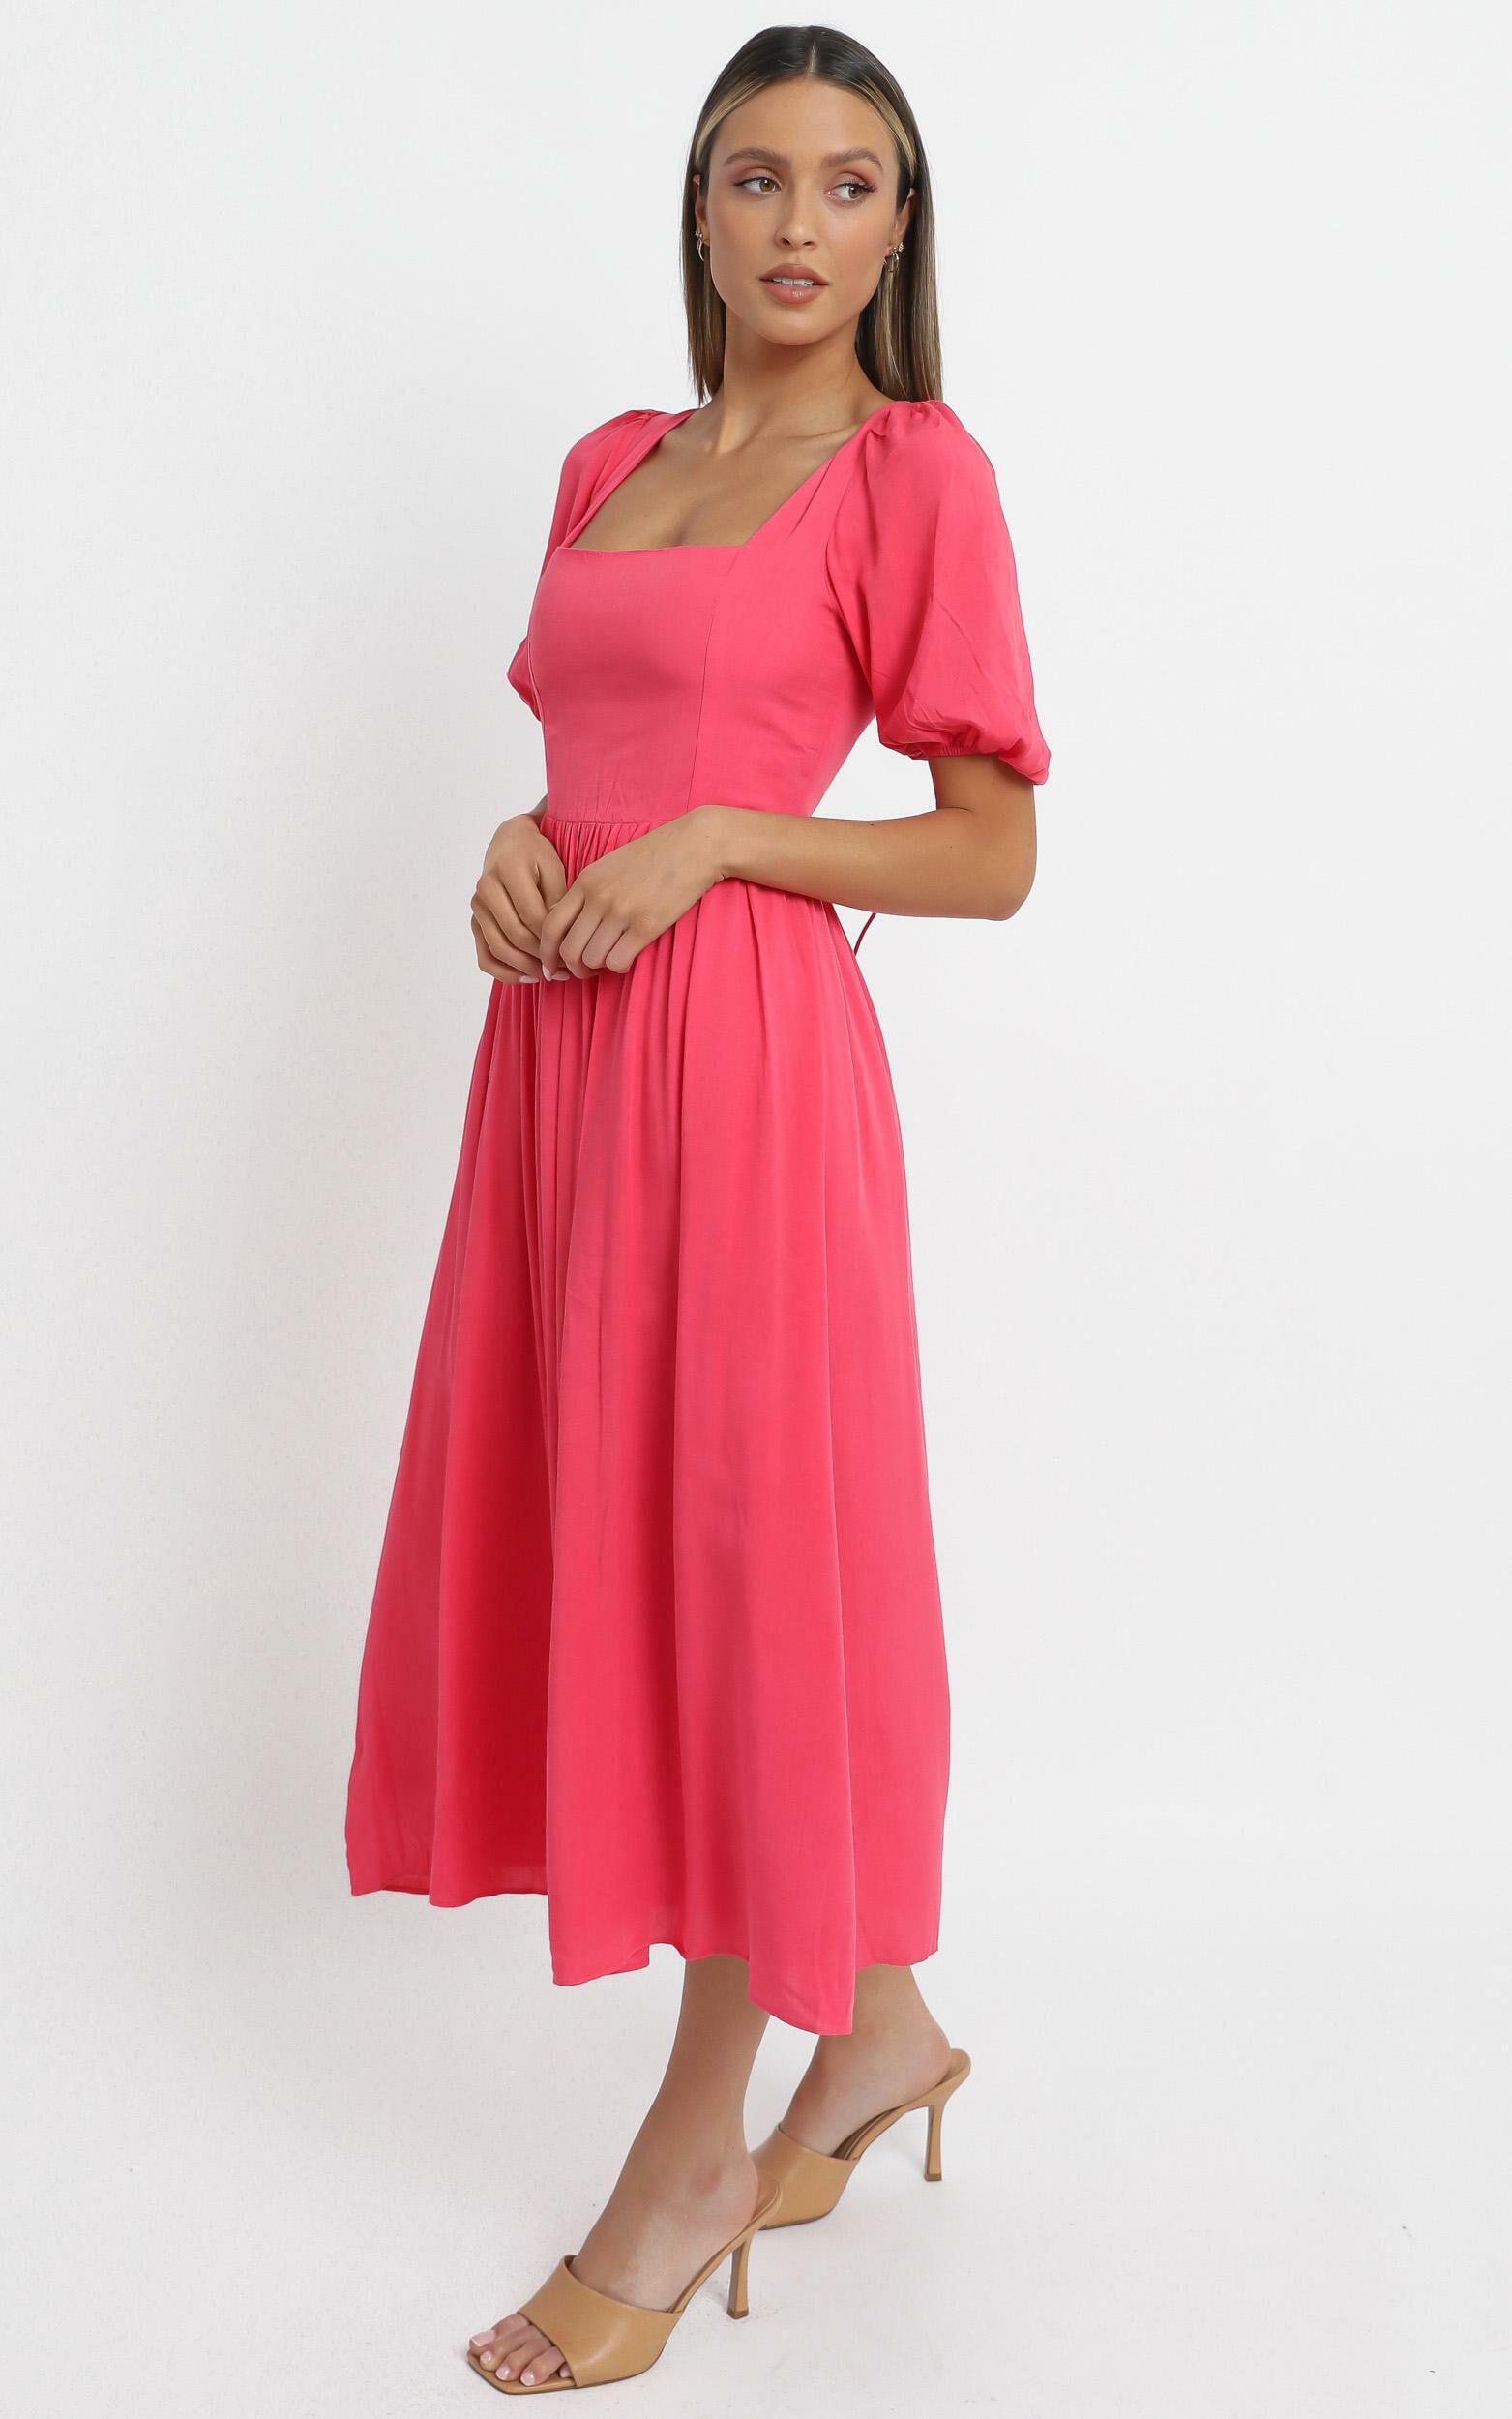 Poppy Dress in Hot Pink | Showpo USA